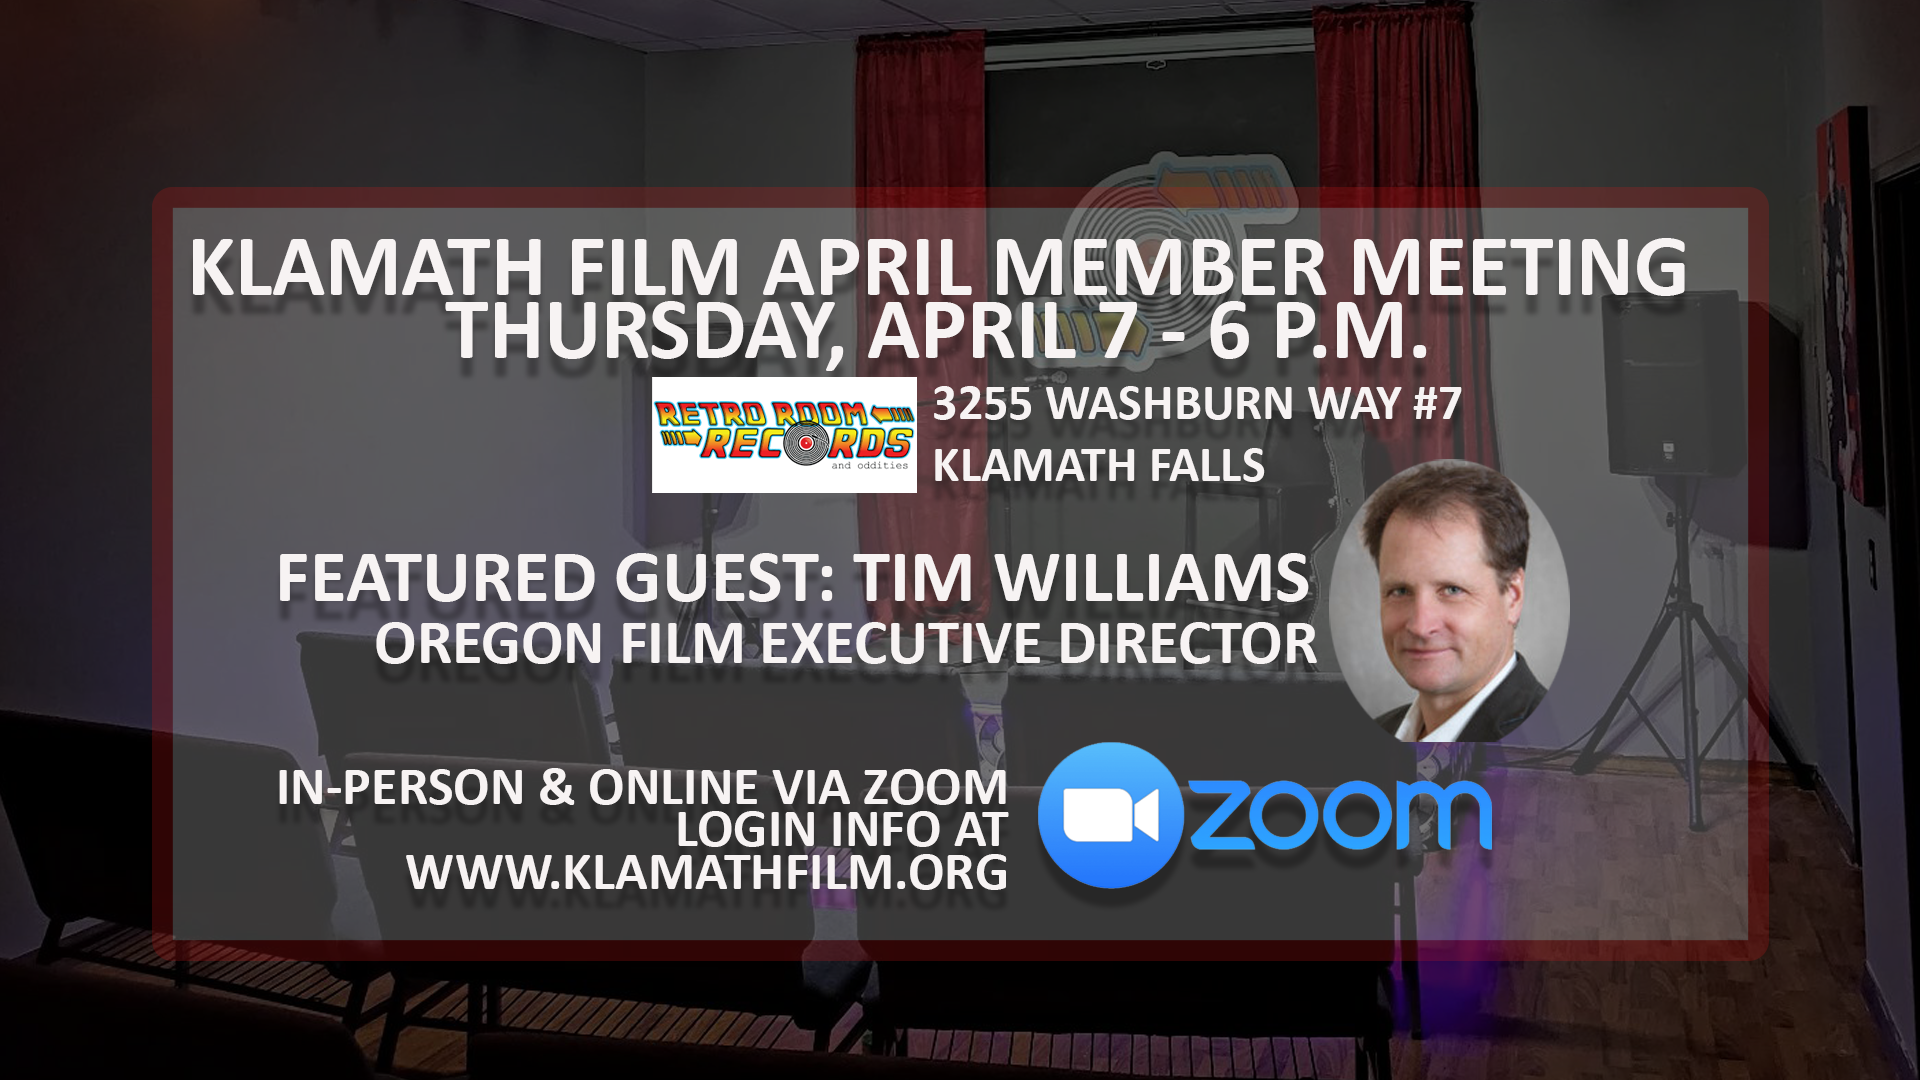 Oregon Film executive director featured guest at April member meeting